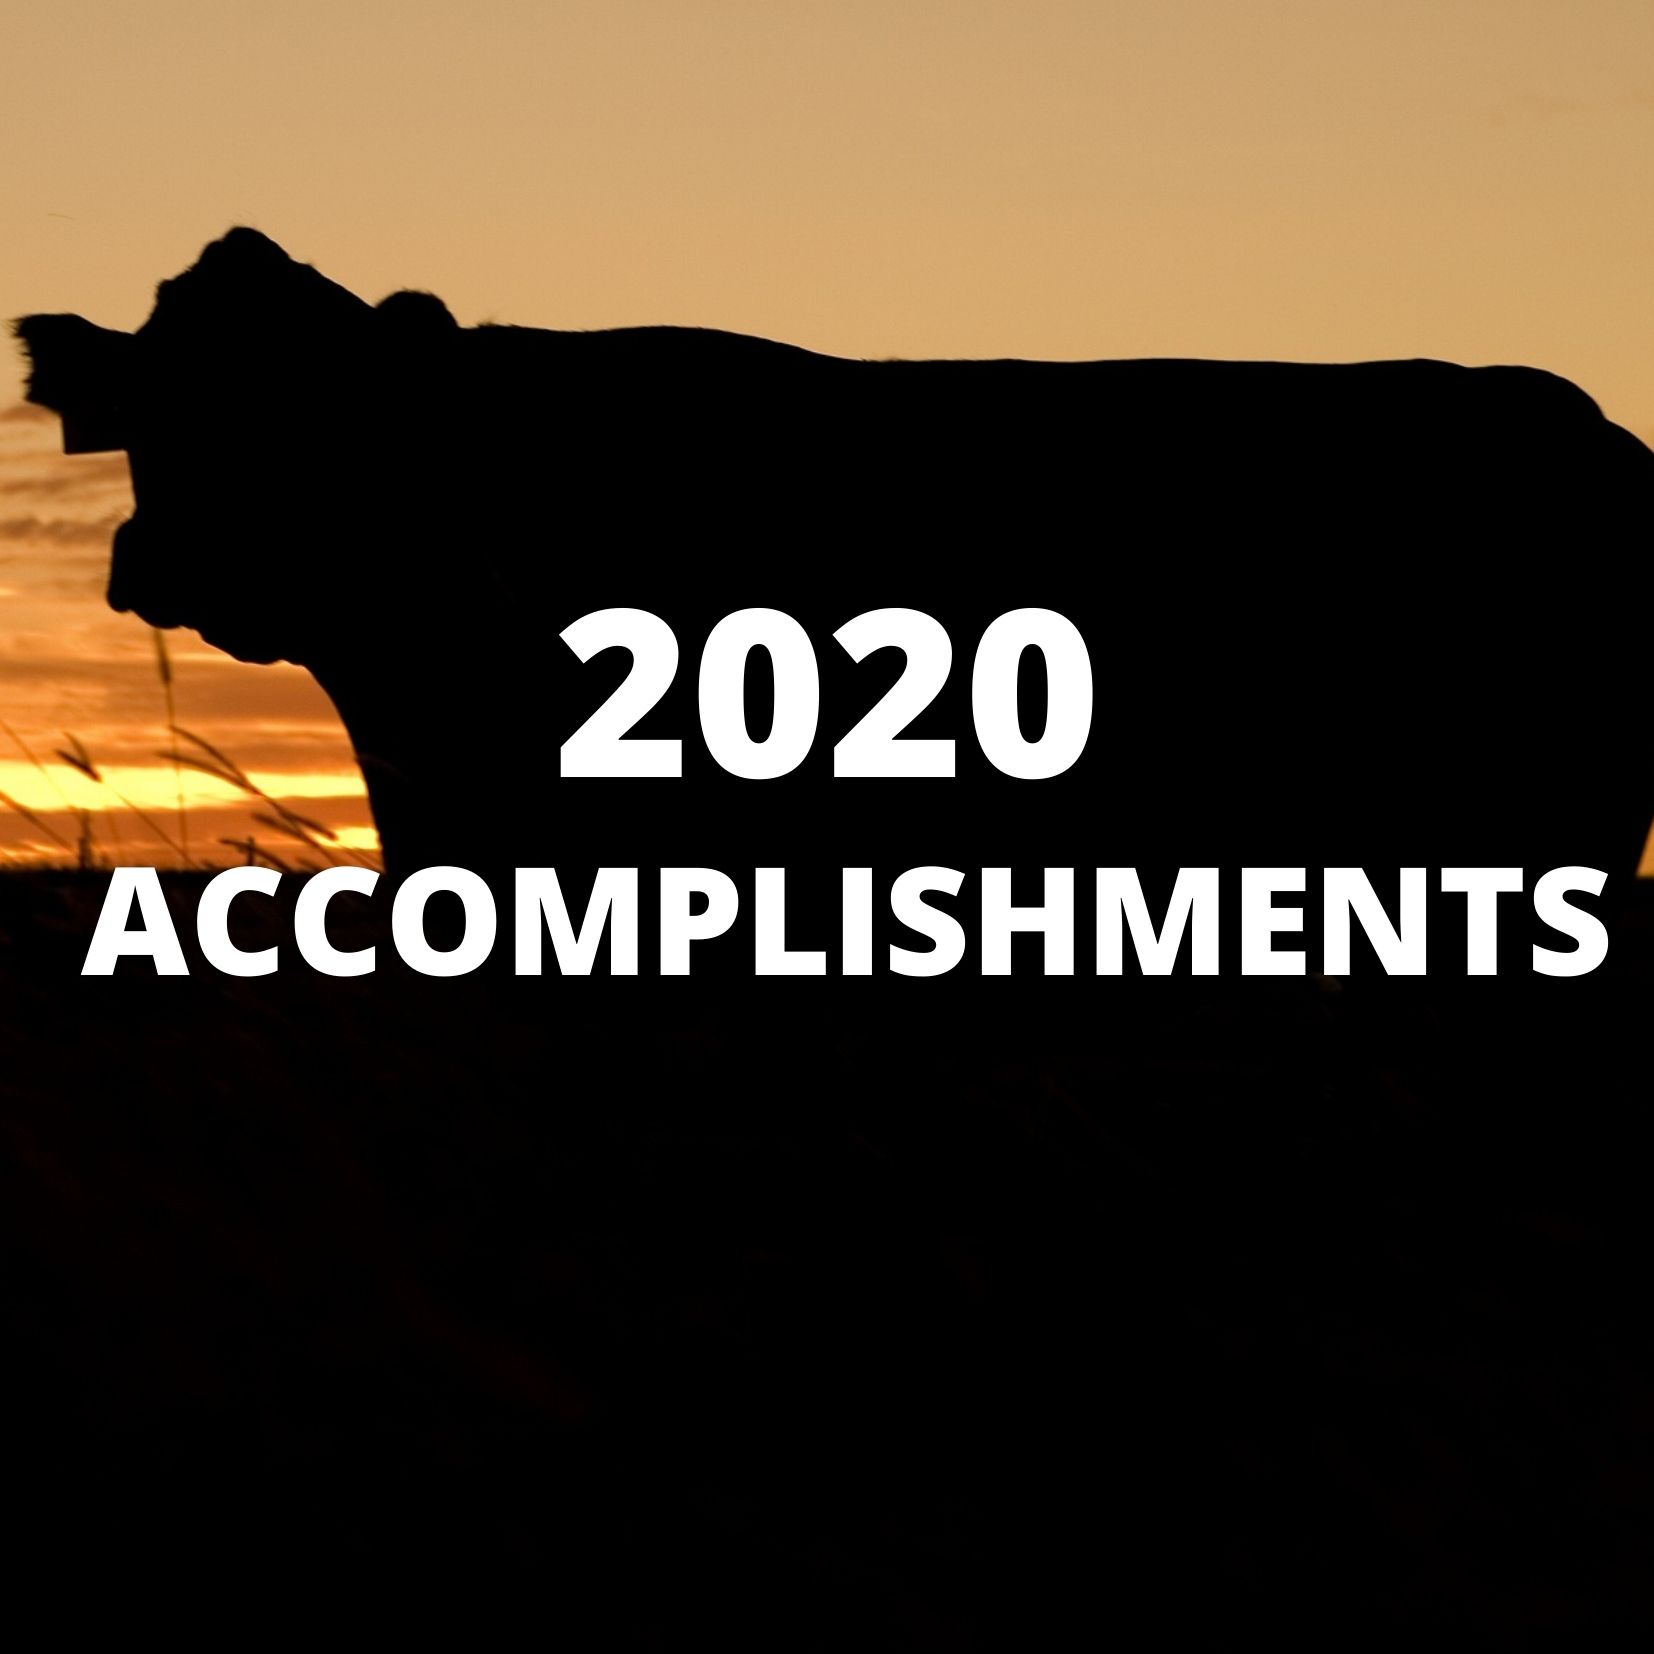 2020 Accomplishments Cow & Sunset